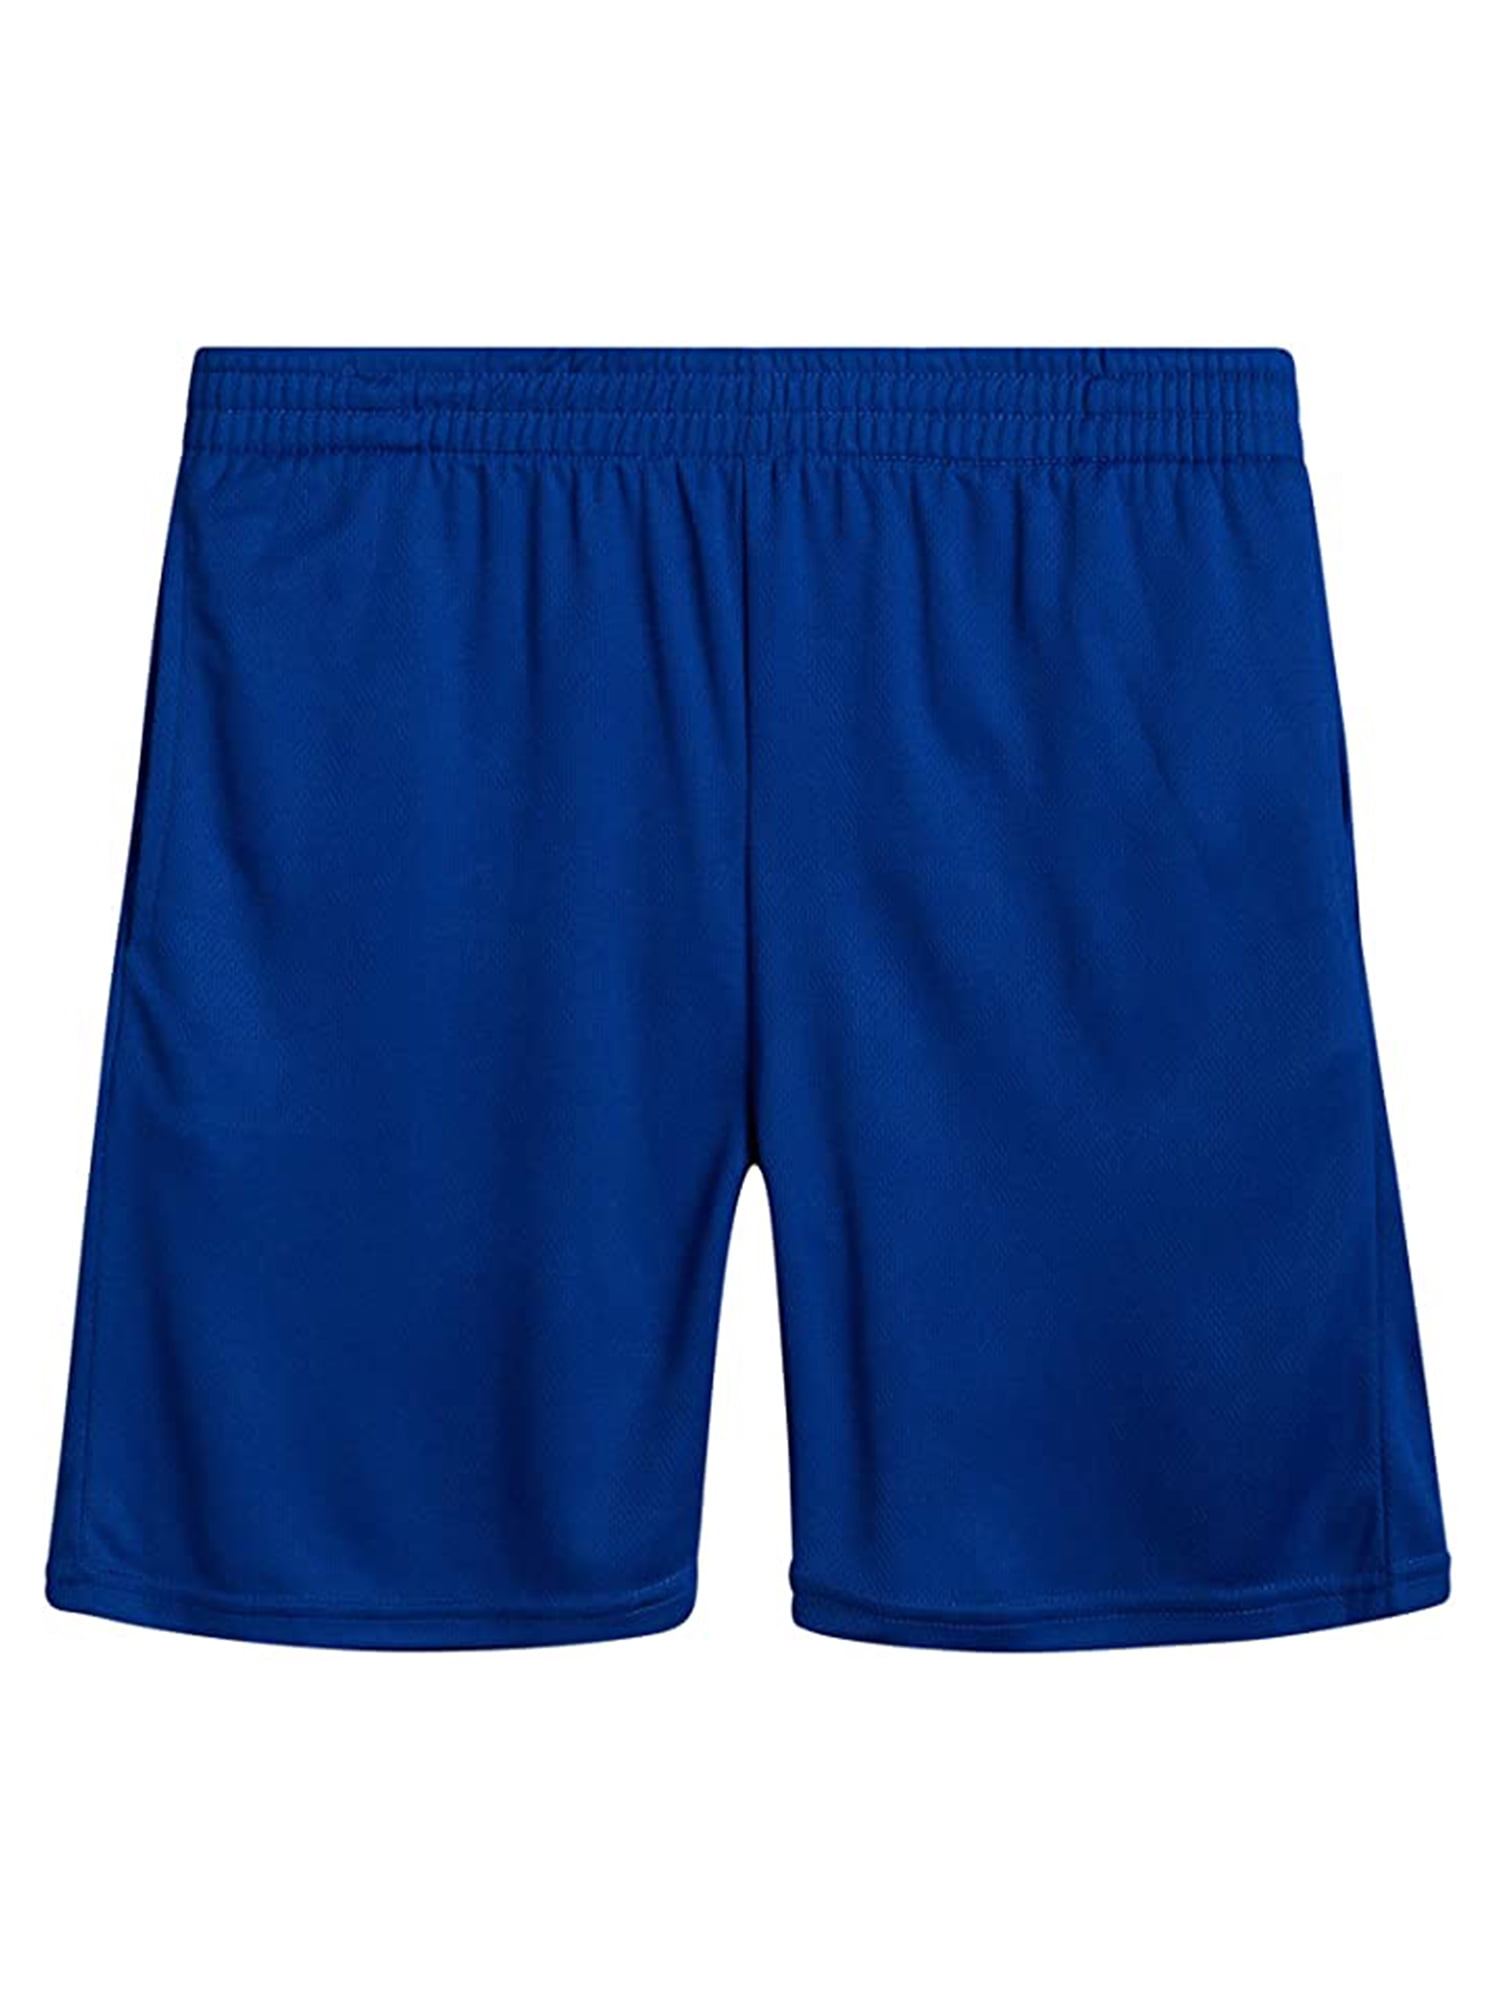 Boys Active Mesh Basketball Shorts (S-XL) - Walmart.com